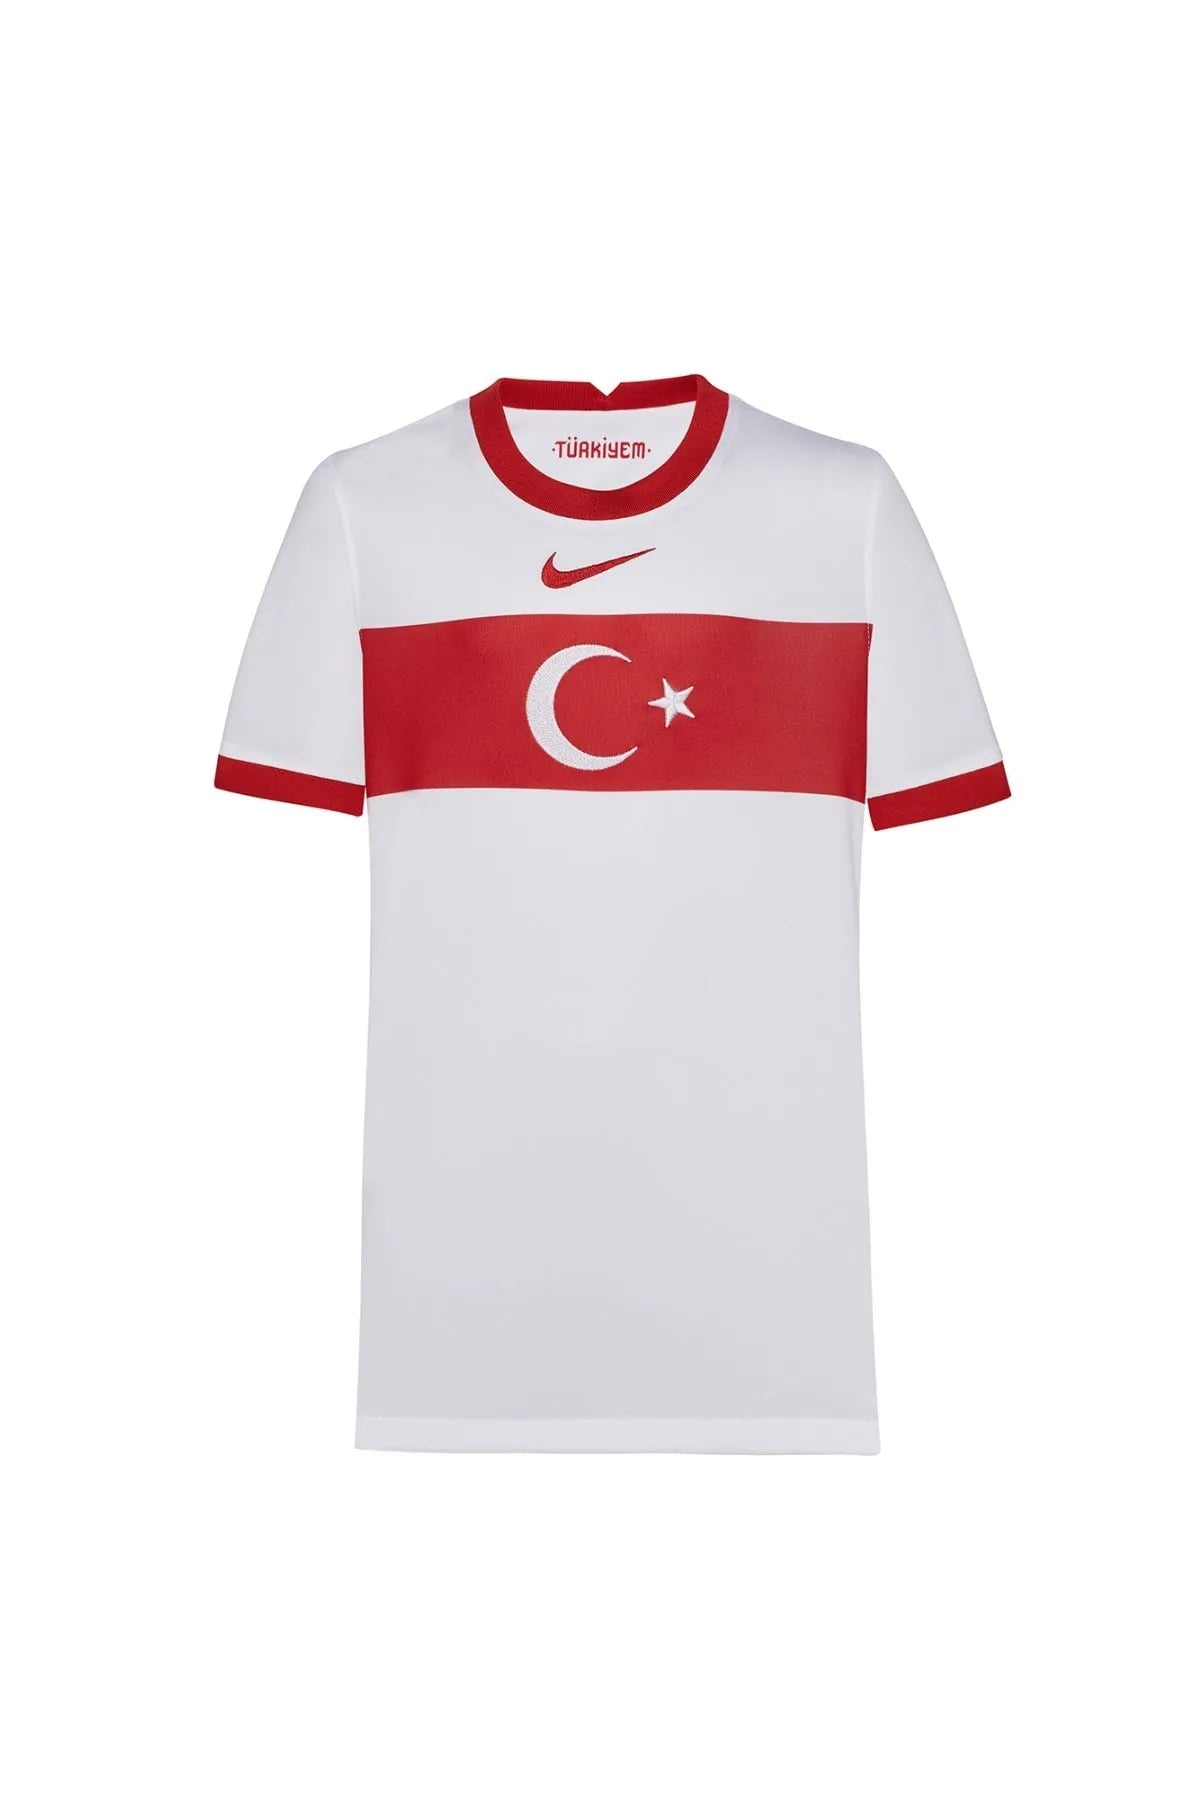 Nike Woman Turkish National Team Football Jersey - TurkishDefenceStore